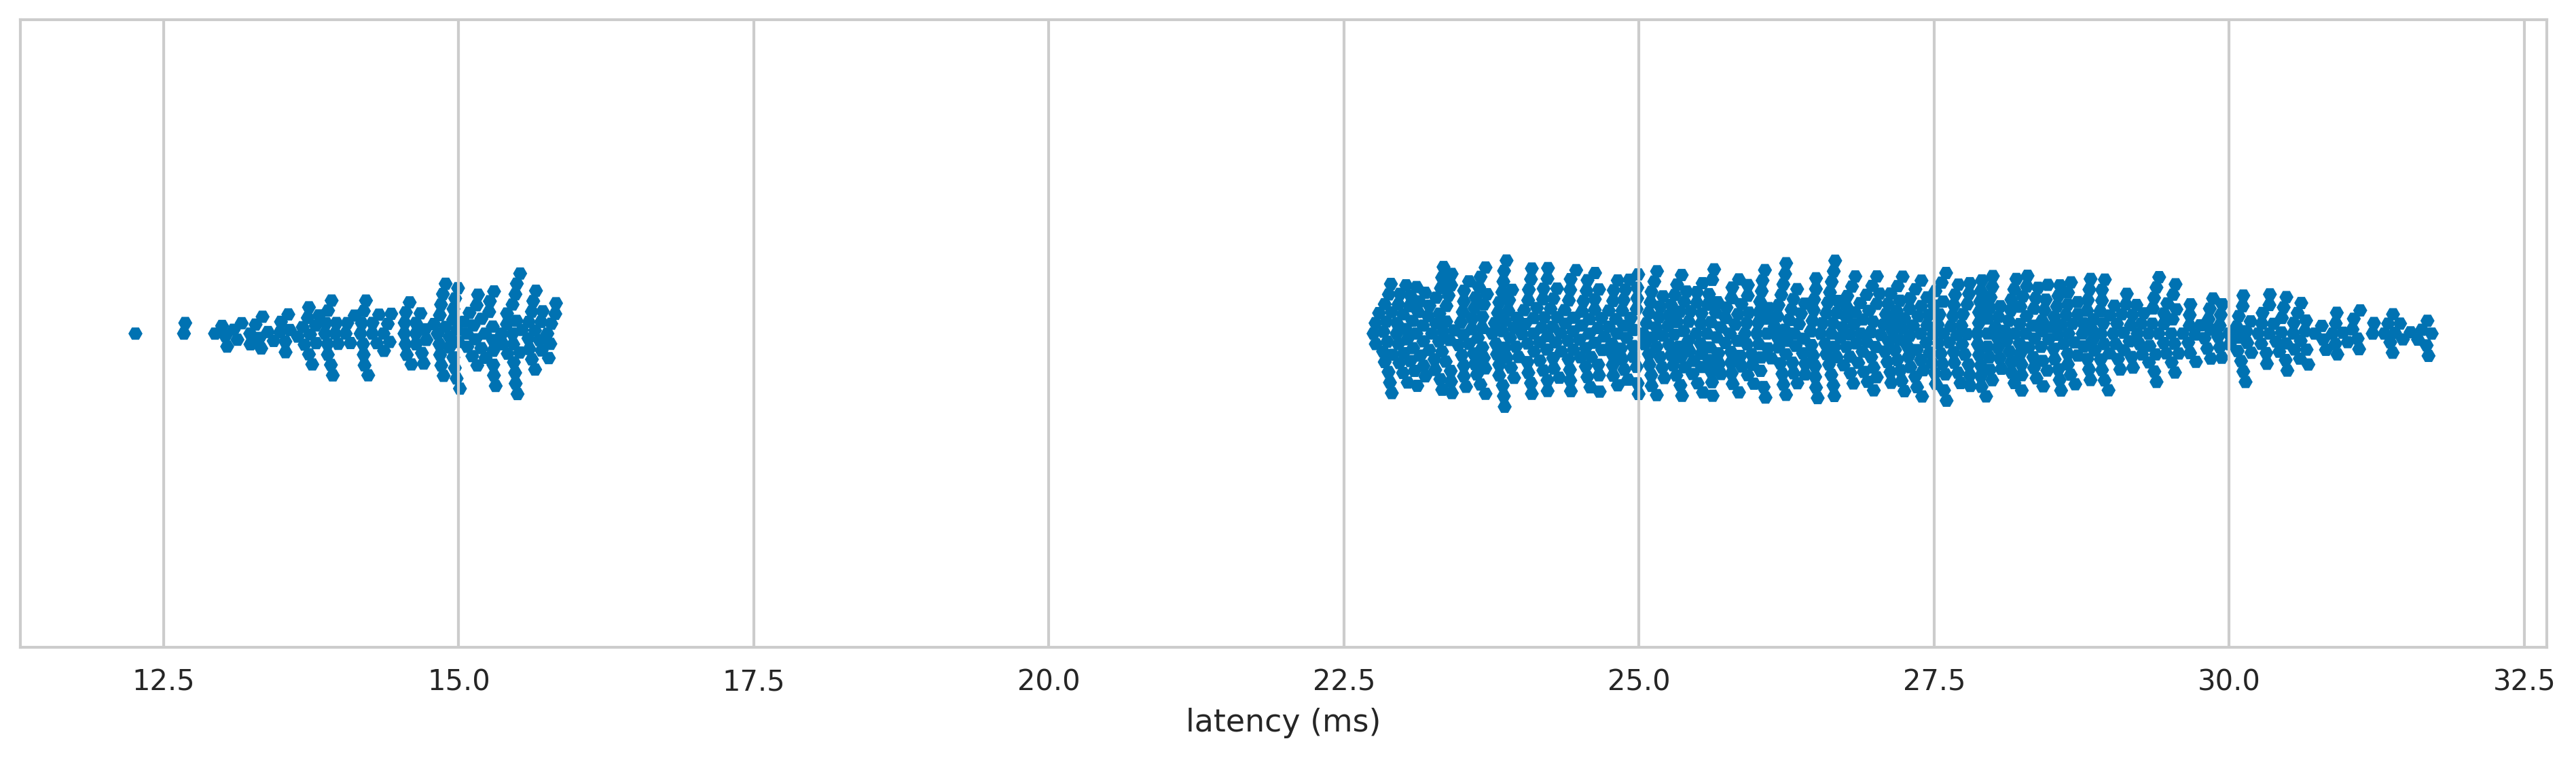 Logitech G15 latency distribution 